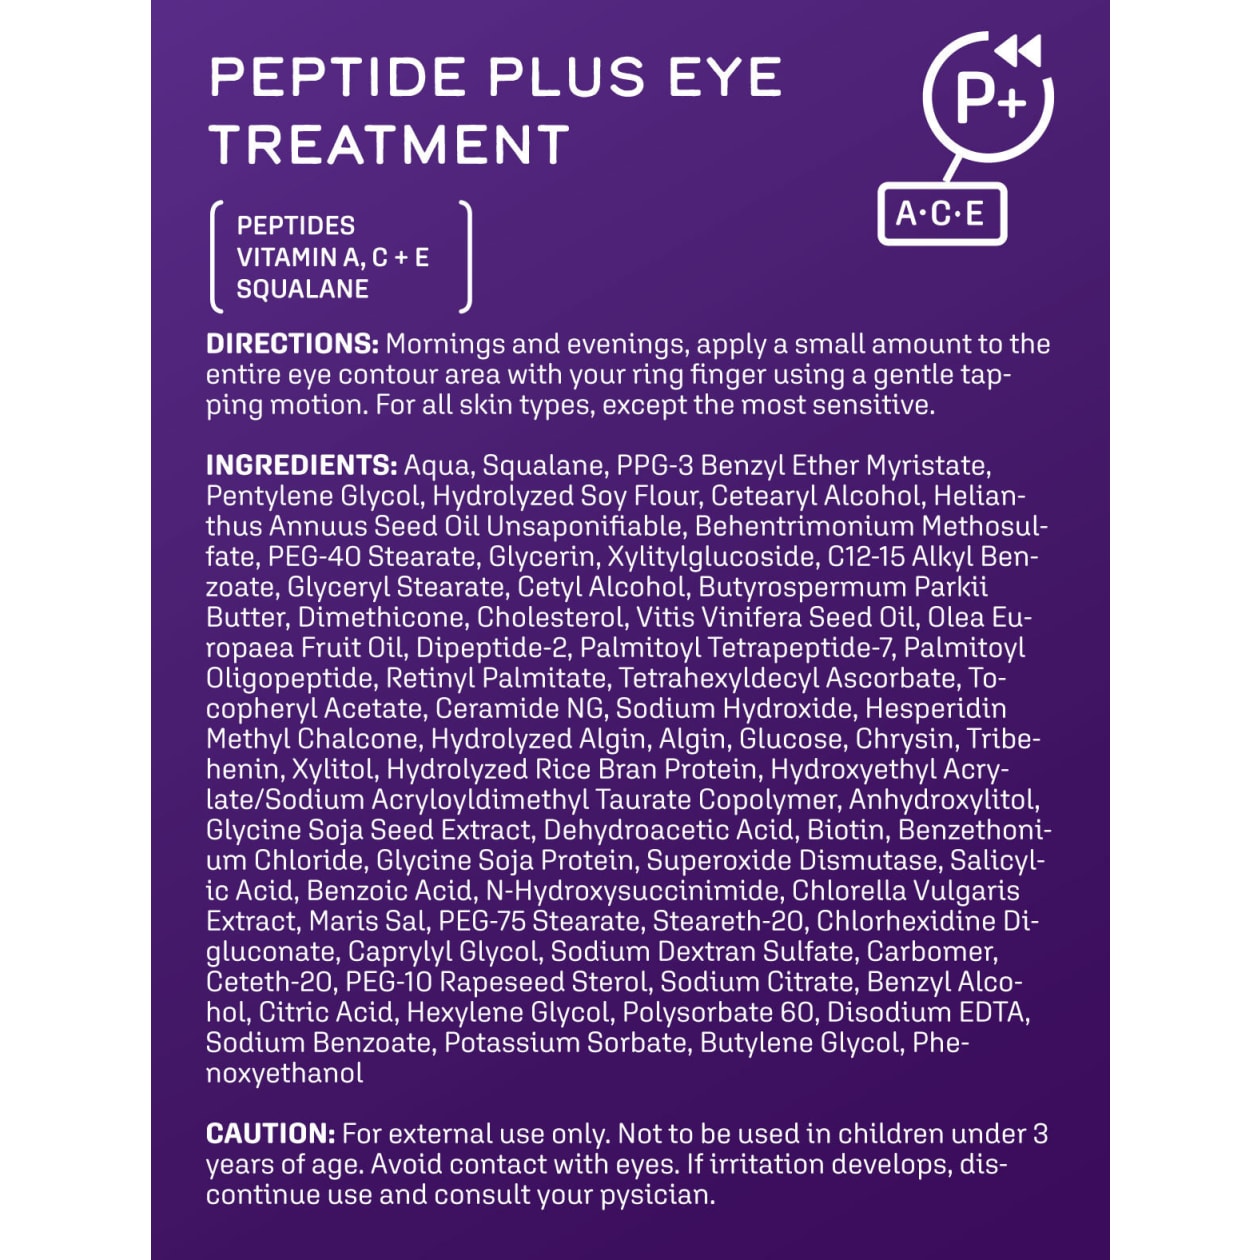 Peptide Plus Eye Treatment